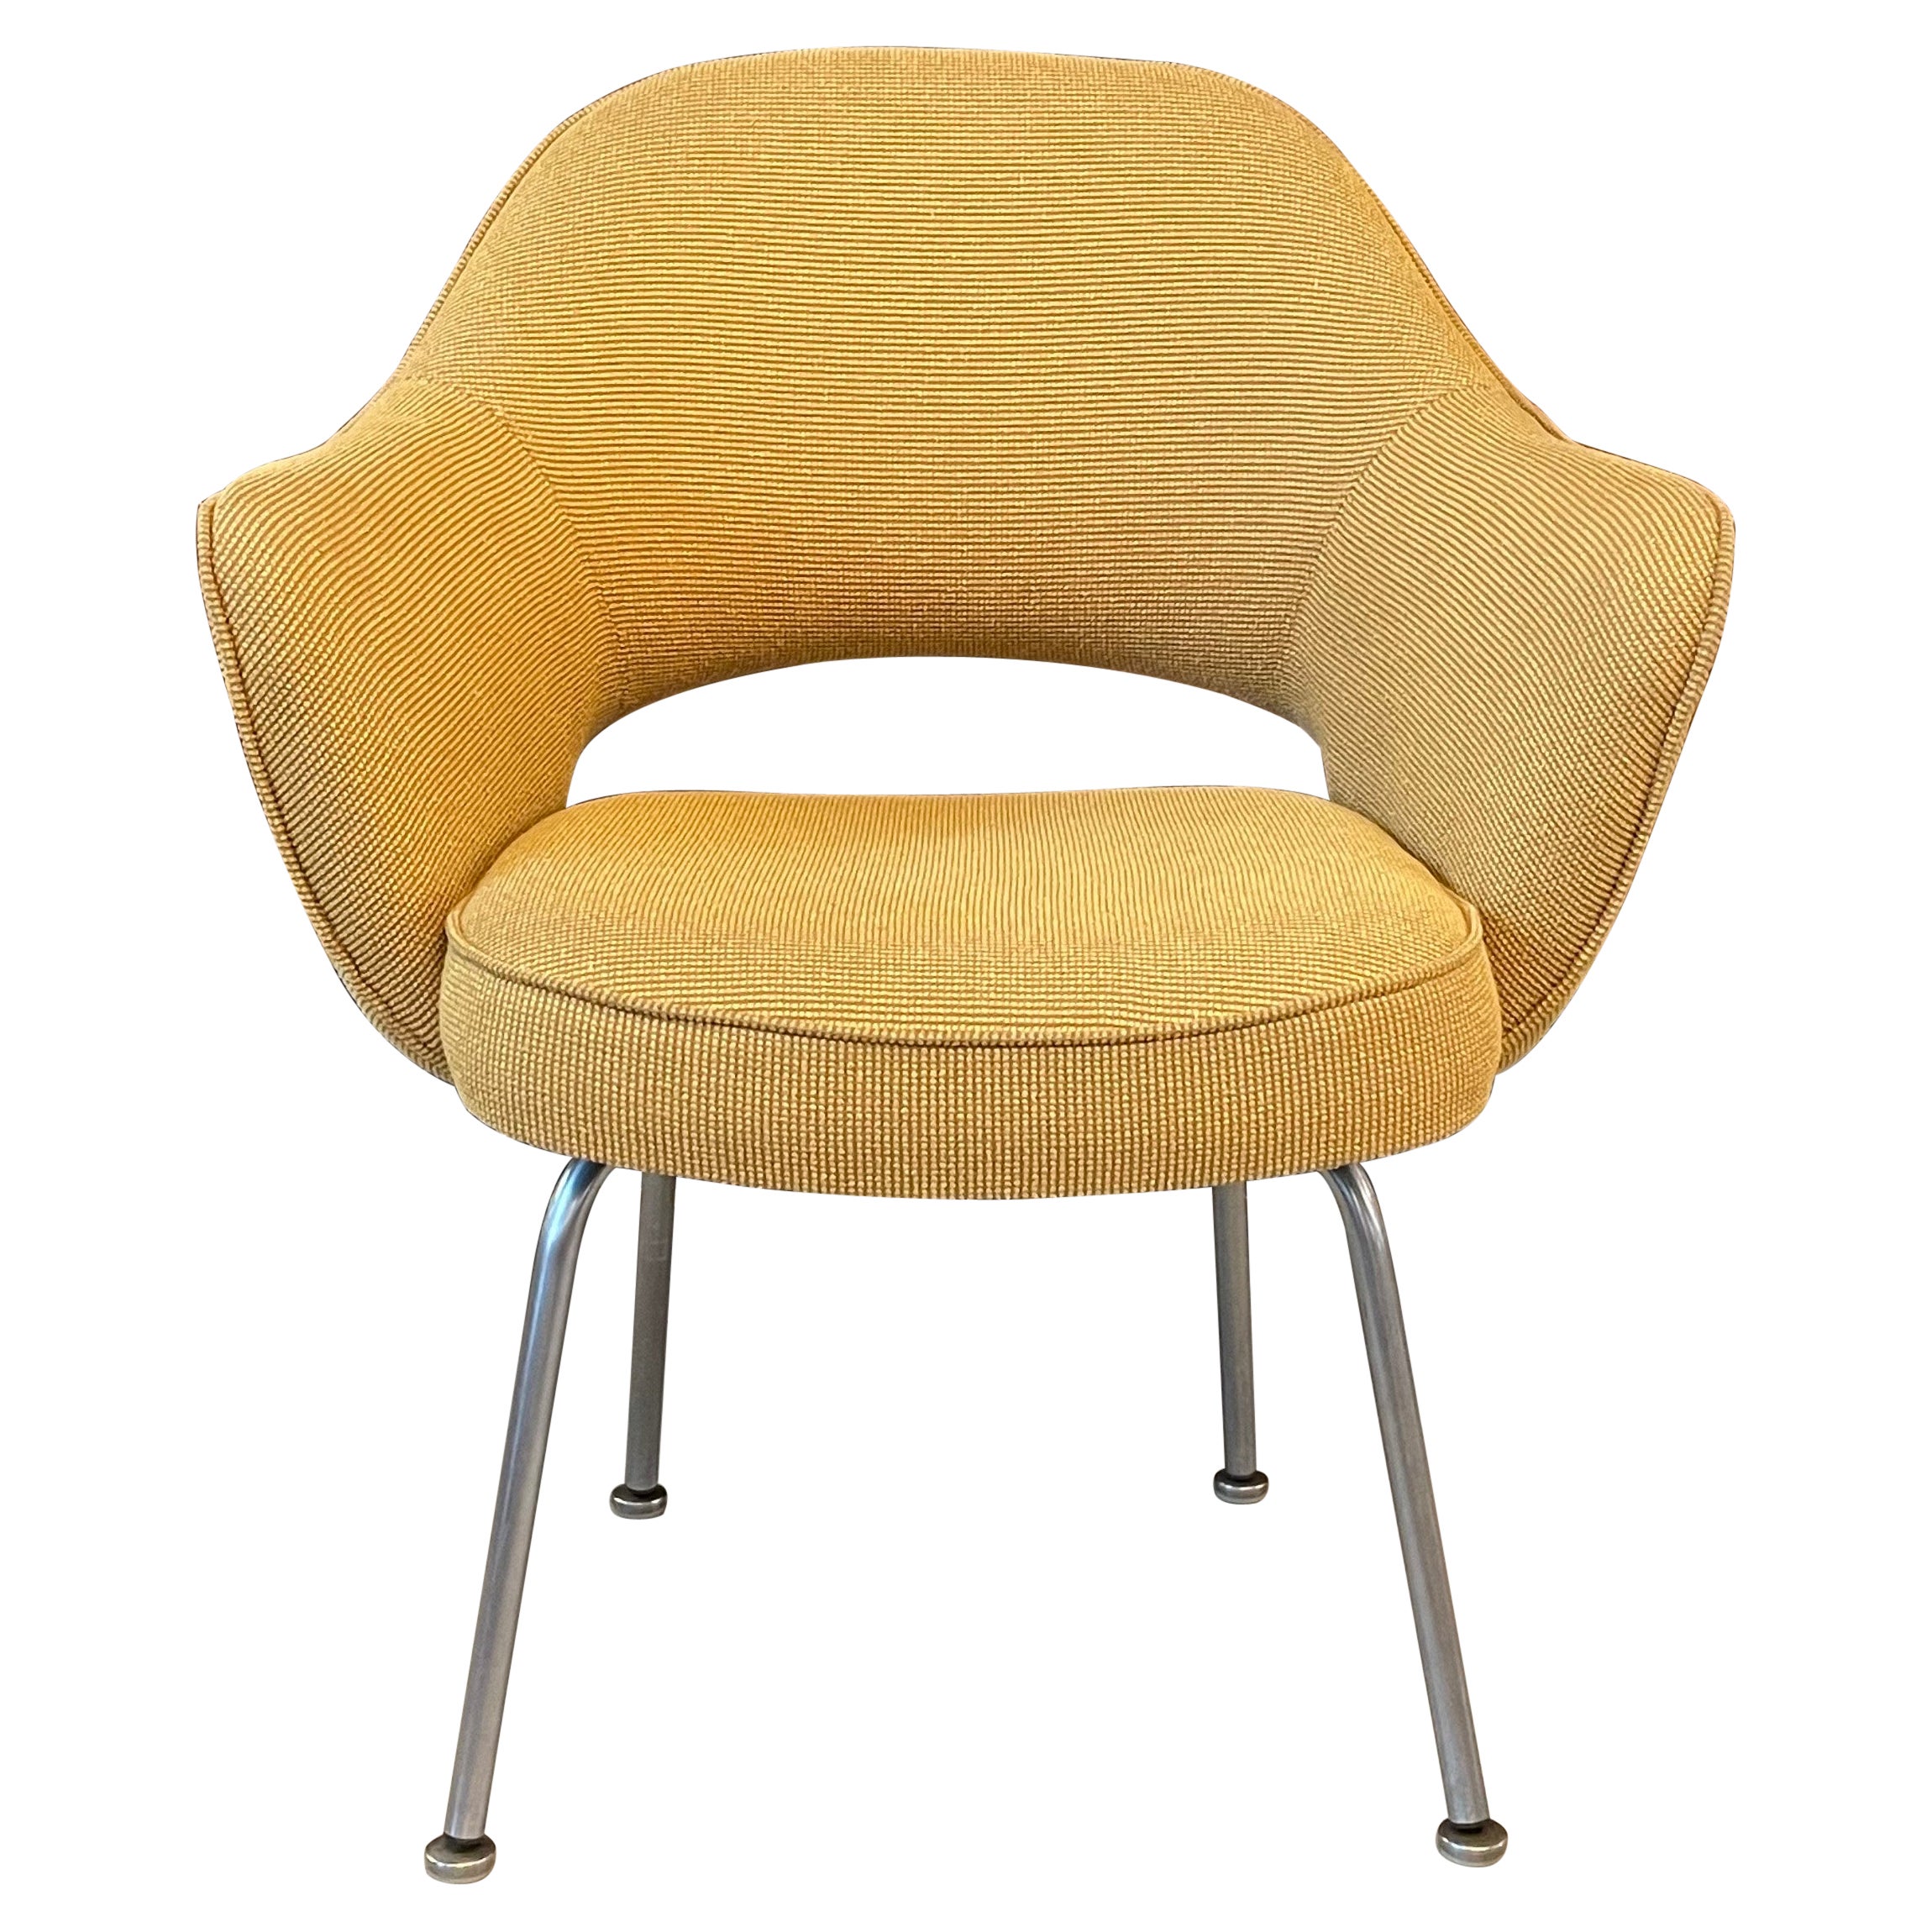 Eero Saarinen Executive Armchair For Knoll Yellow Upholstery